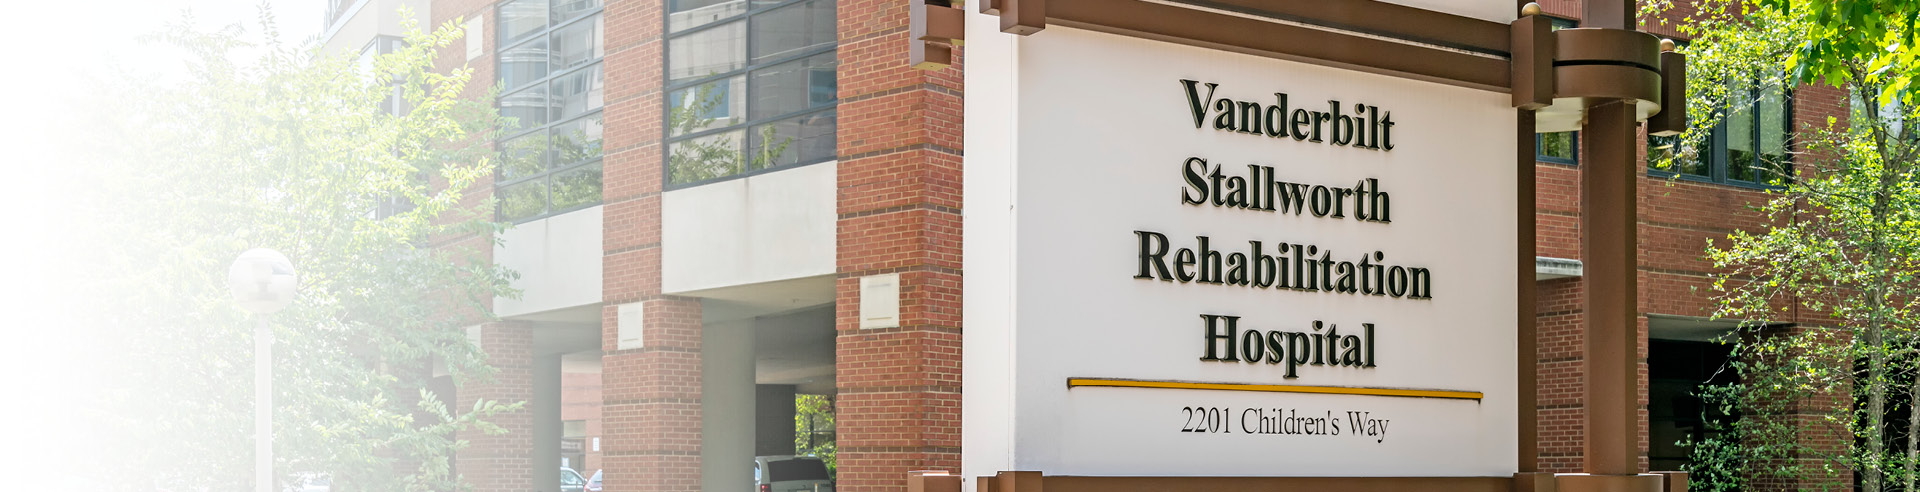 Vanderbilt Stallworth Rehabilitation Hospital exterior